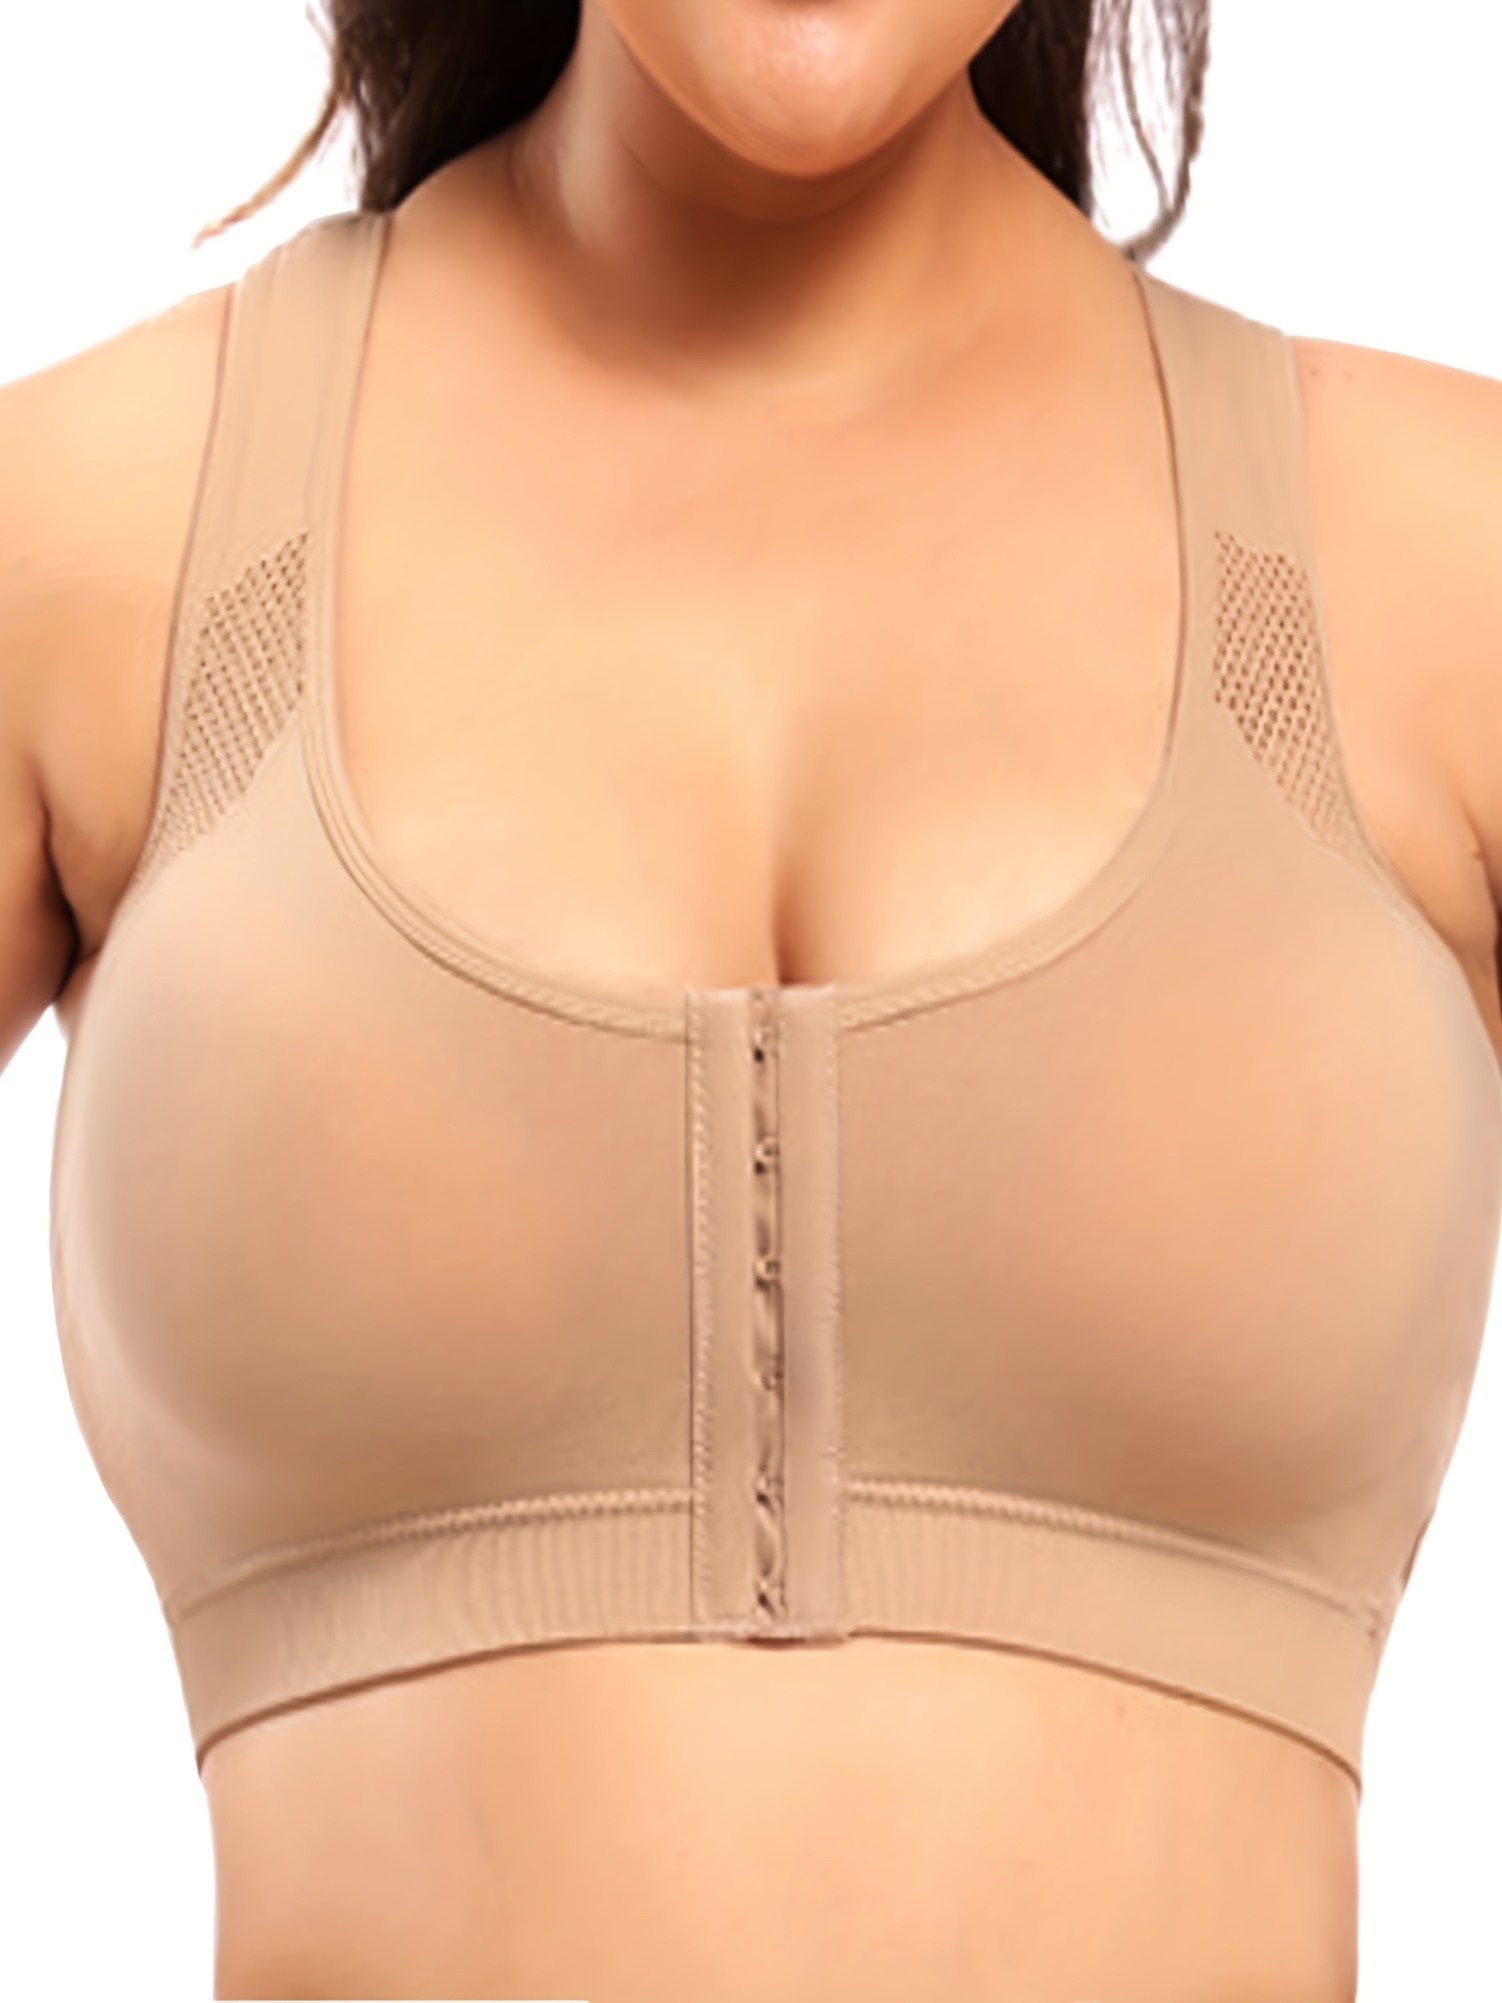 Jengo Post Surgery Bra for Women Surgical Bras Front Closure Sports Bras  Breast Augmentation Mastectomy Bra Post Op Bra (Small, Black) :  : Fashion